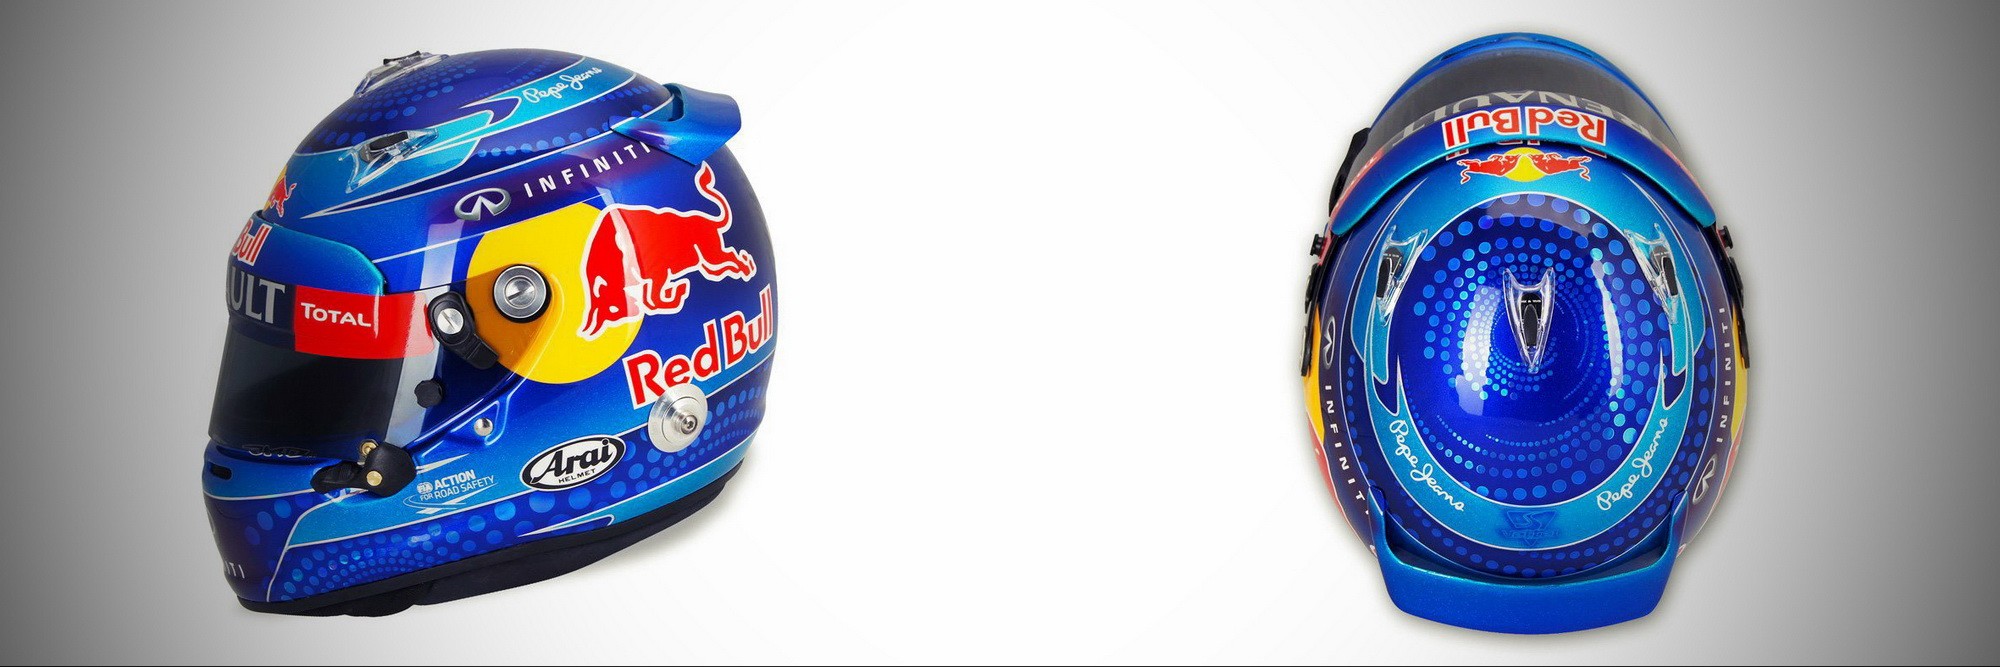 Шлем Себастьяна Феттеля на сезон 2013 года | 2013 helmet of Sebastian Vettel